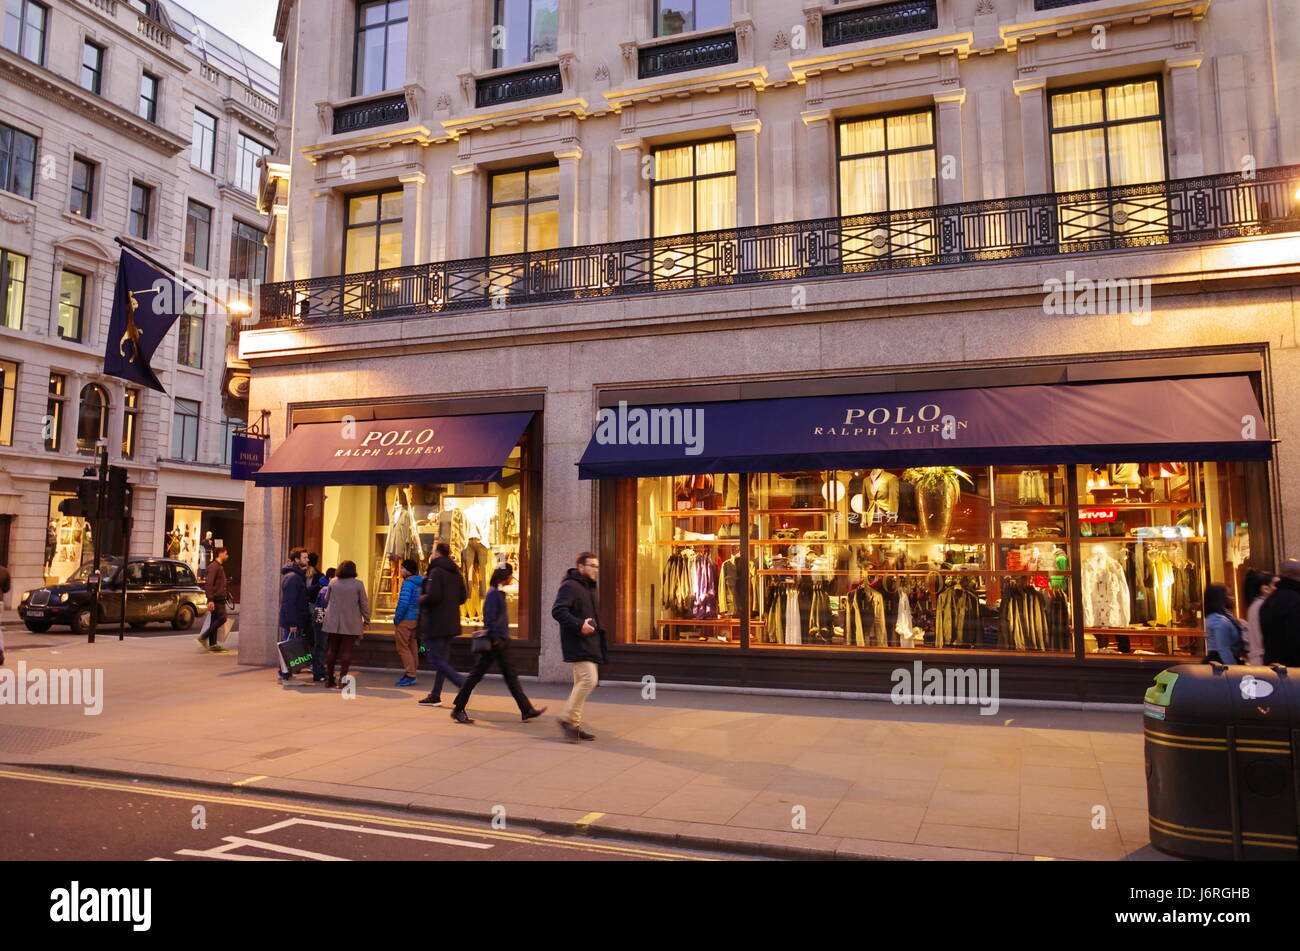 POLO Ralph Lauren designer clothing store on Bond Street, London, UK Stock  Photo - Alamy